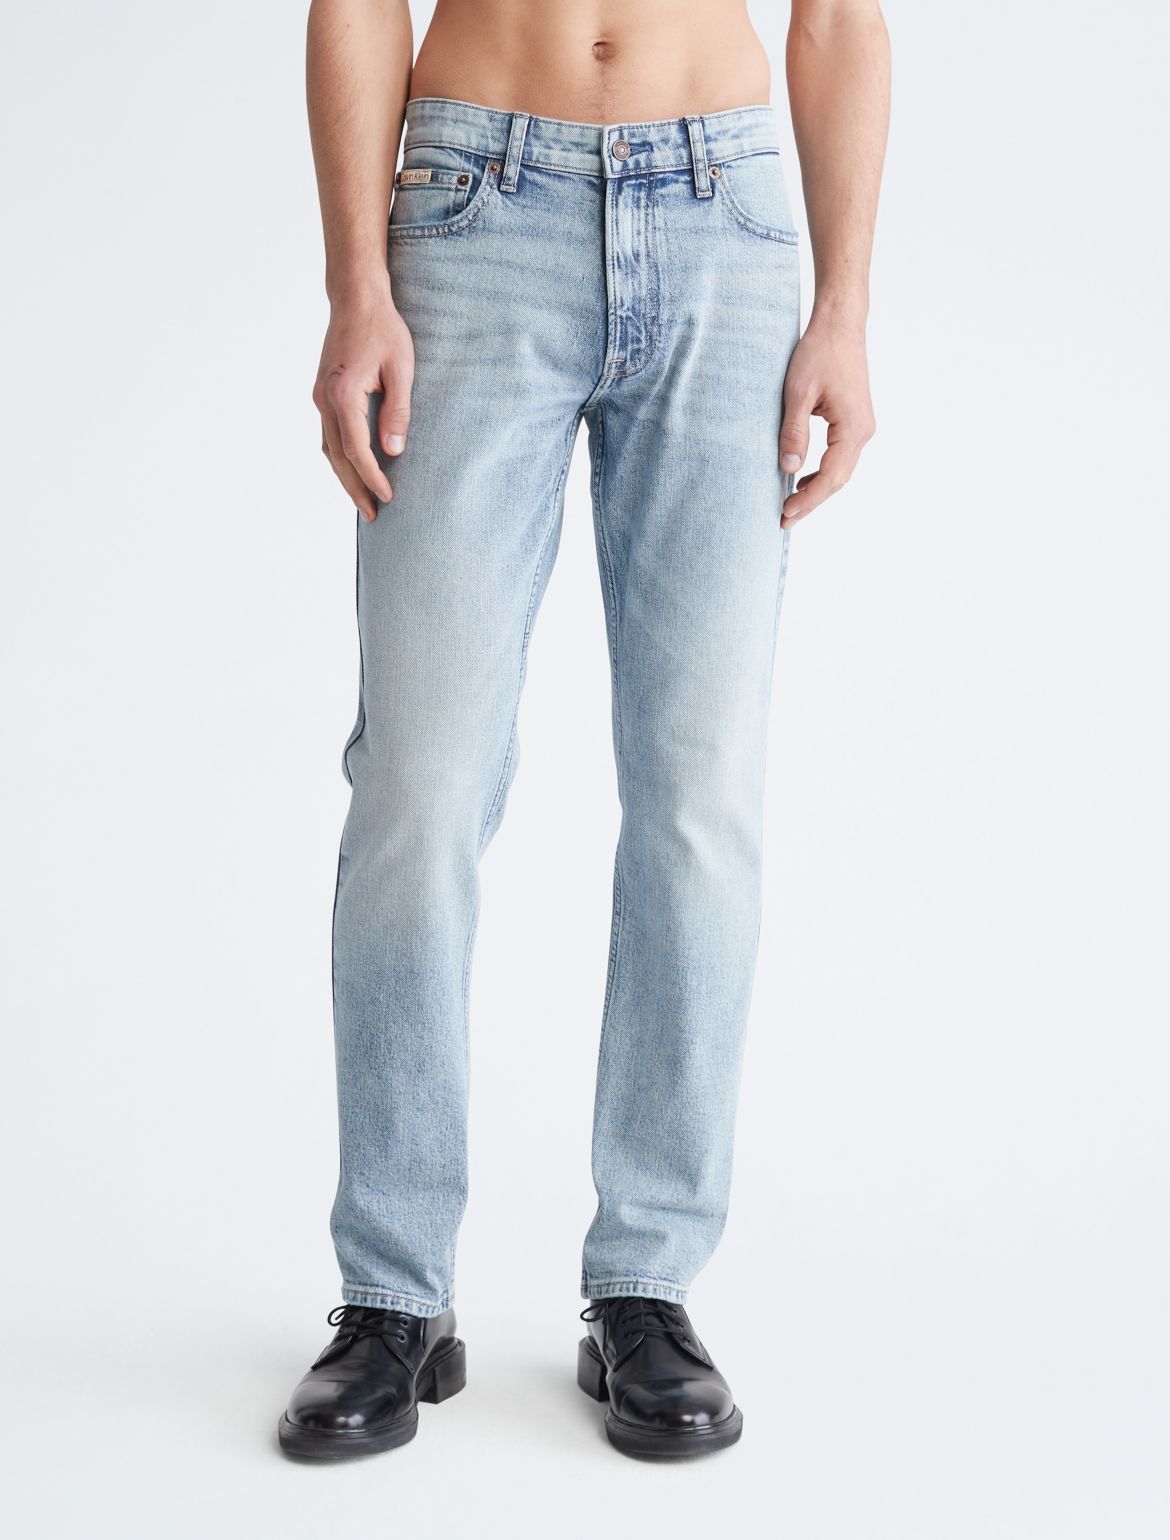 Calvin Klein Men's Slim Fit Jean - Blue - 38W x 30L